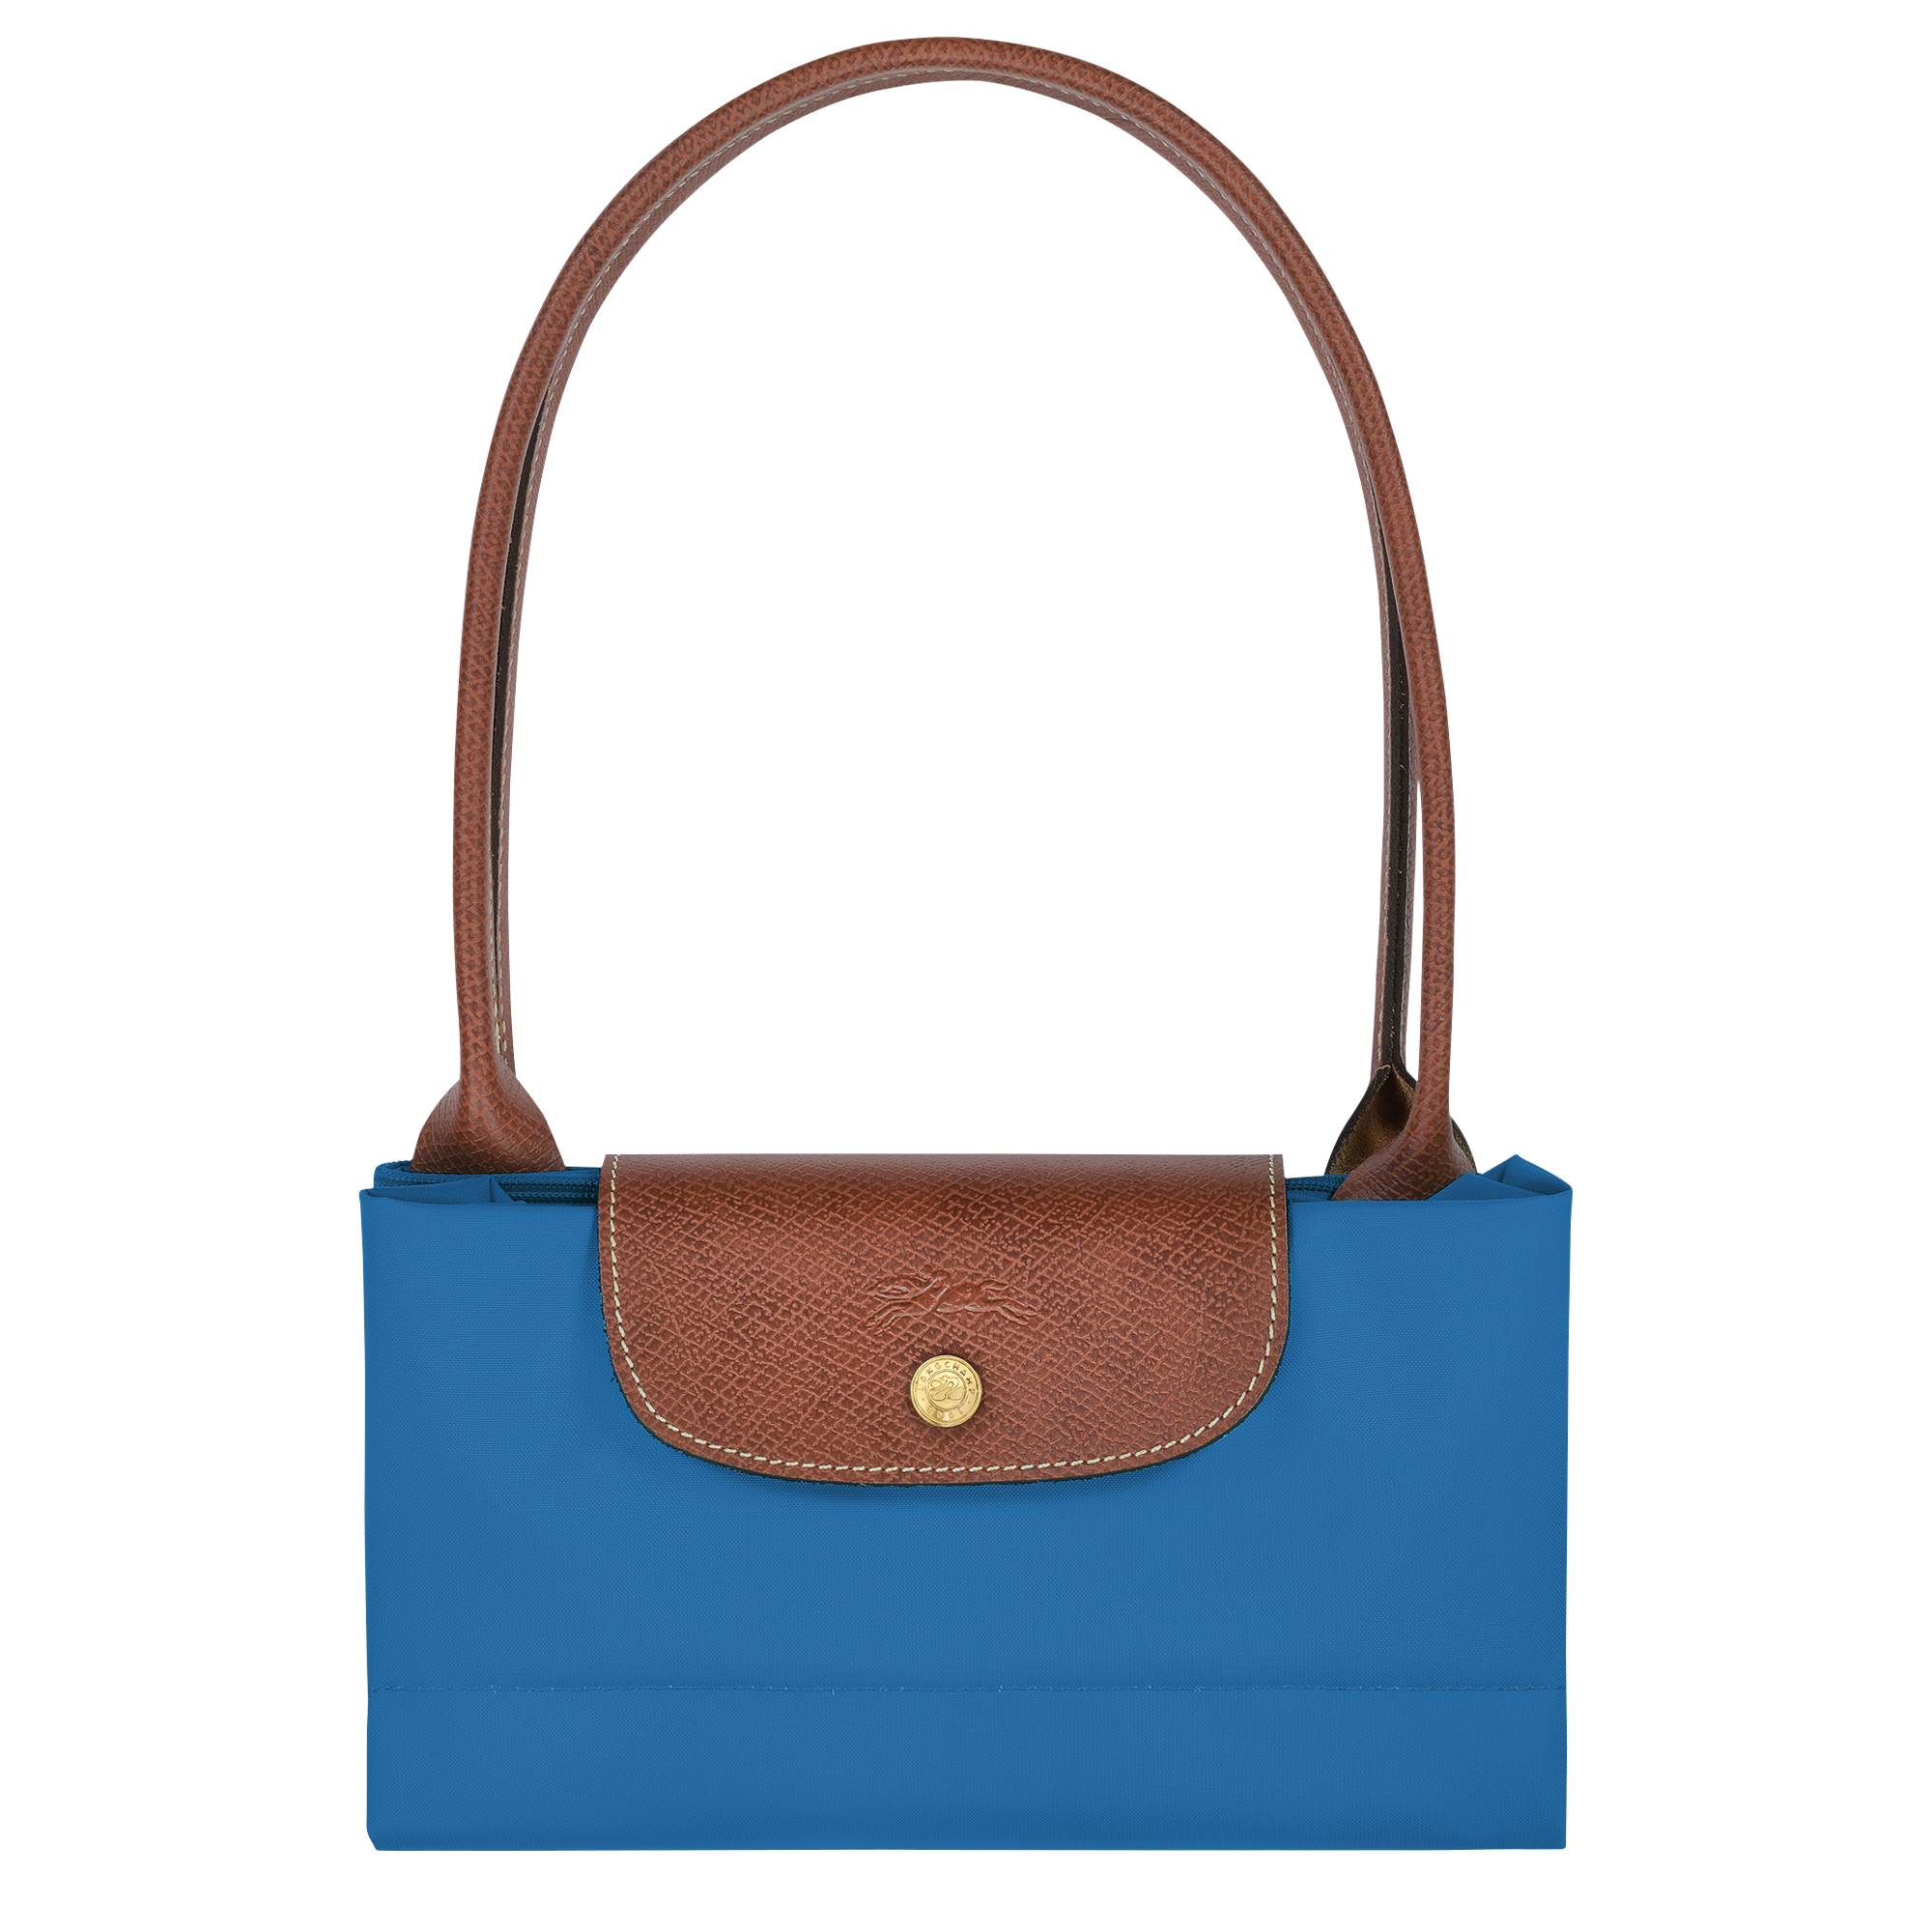 Le Pliage 原創系列 肩揹袋 L, 鈷藍色